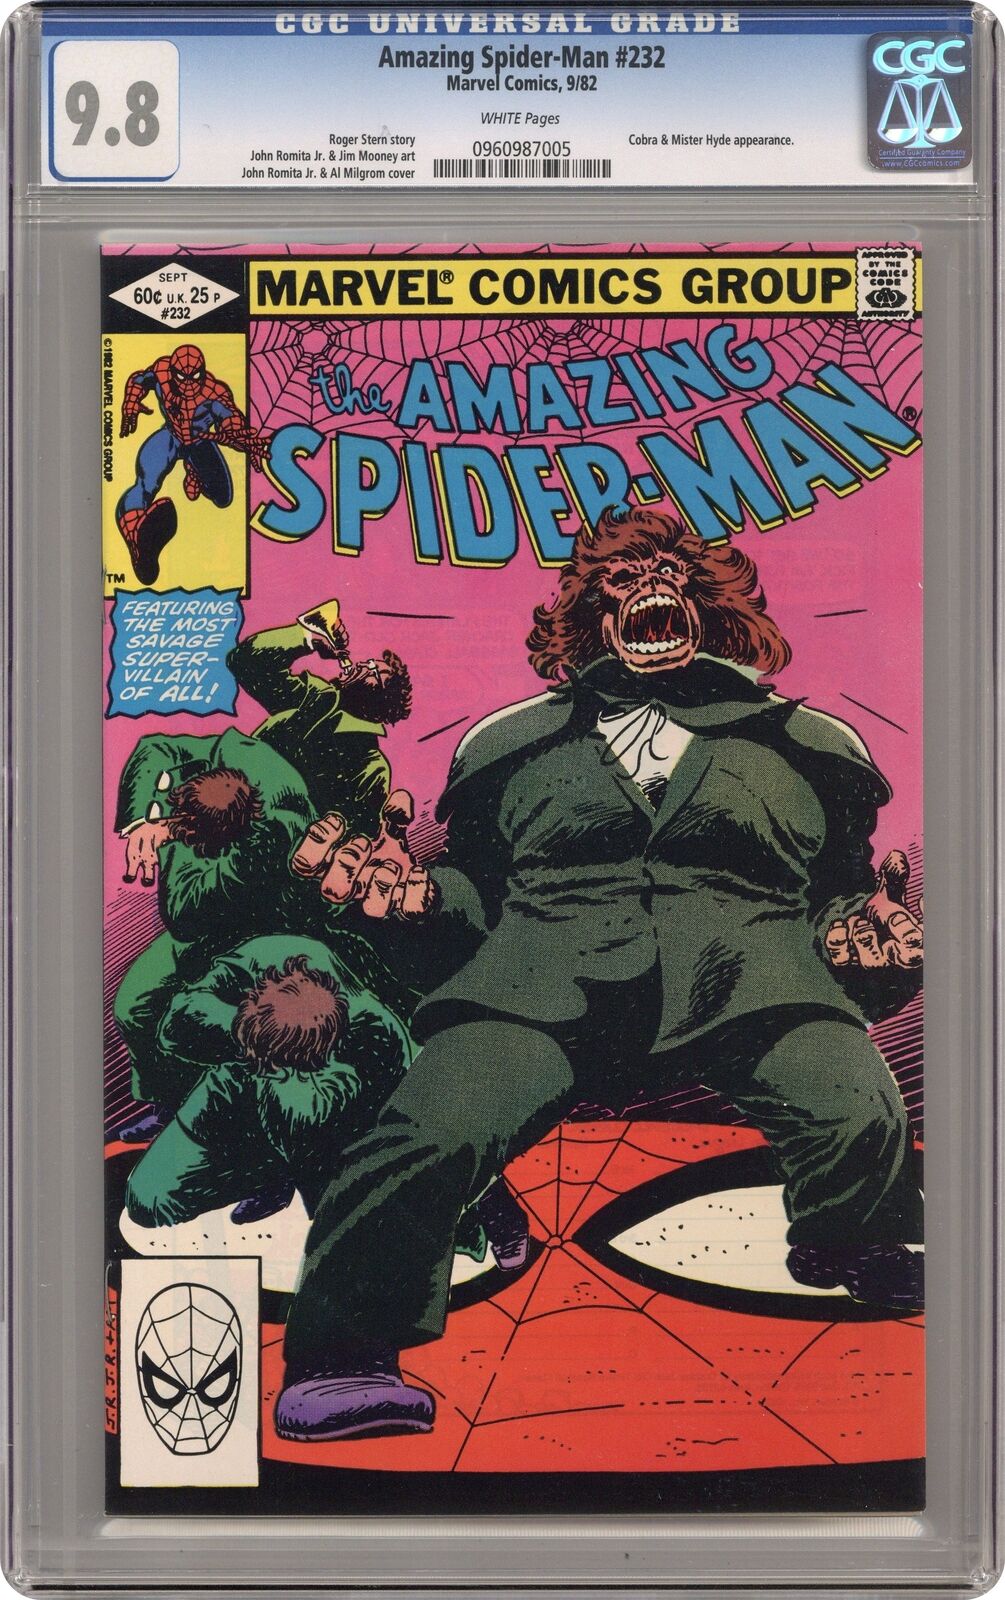 Amazing Spider-Man #232 CGC 9.8 1982 0960987005